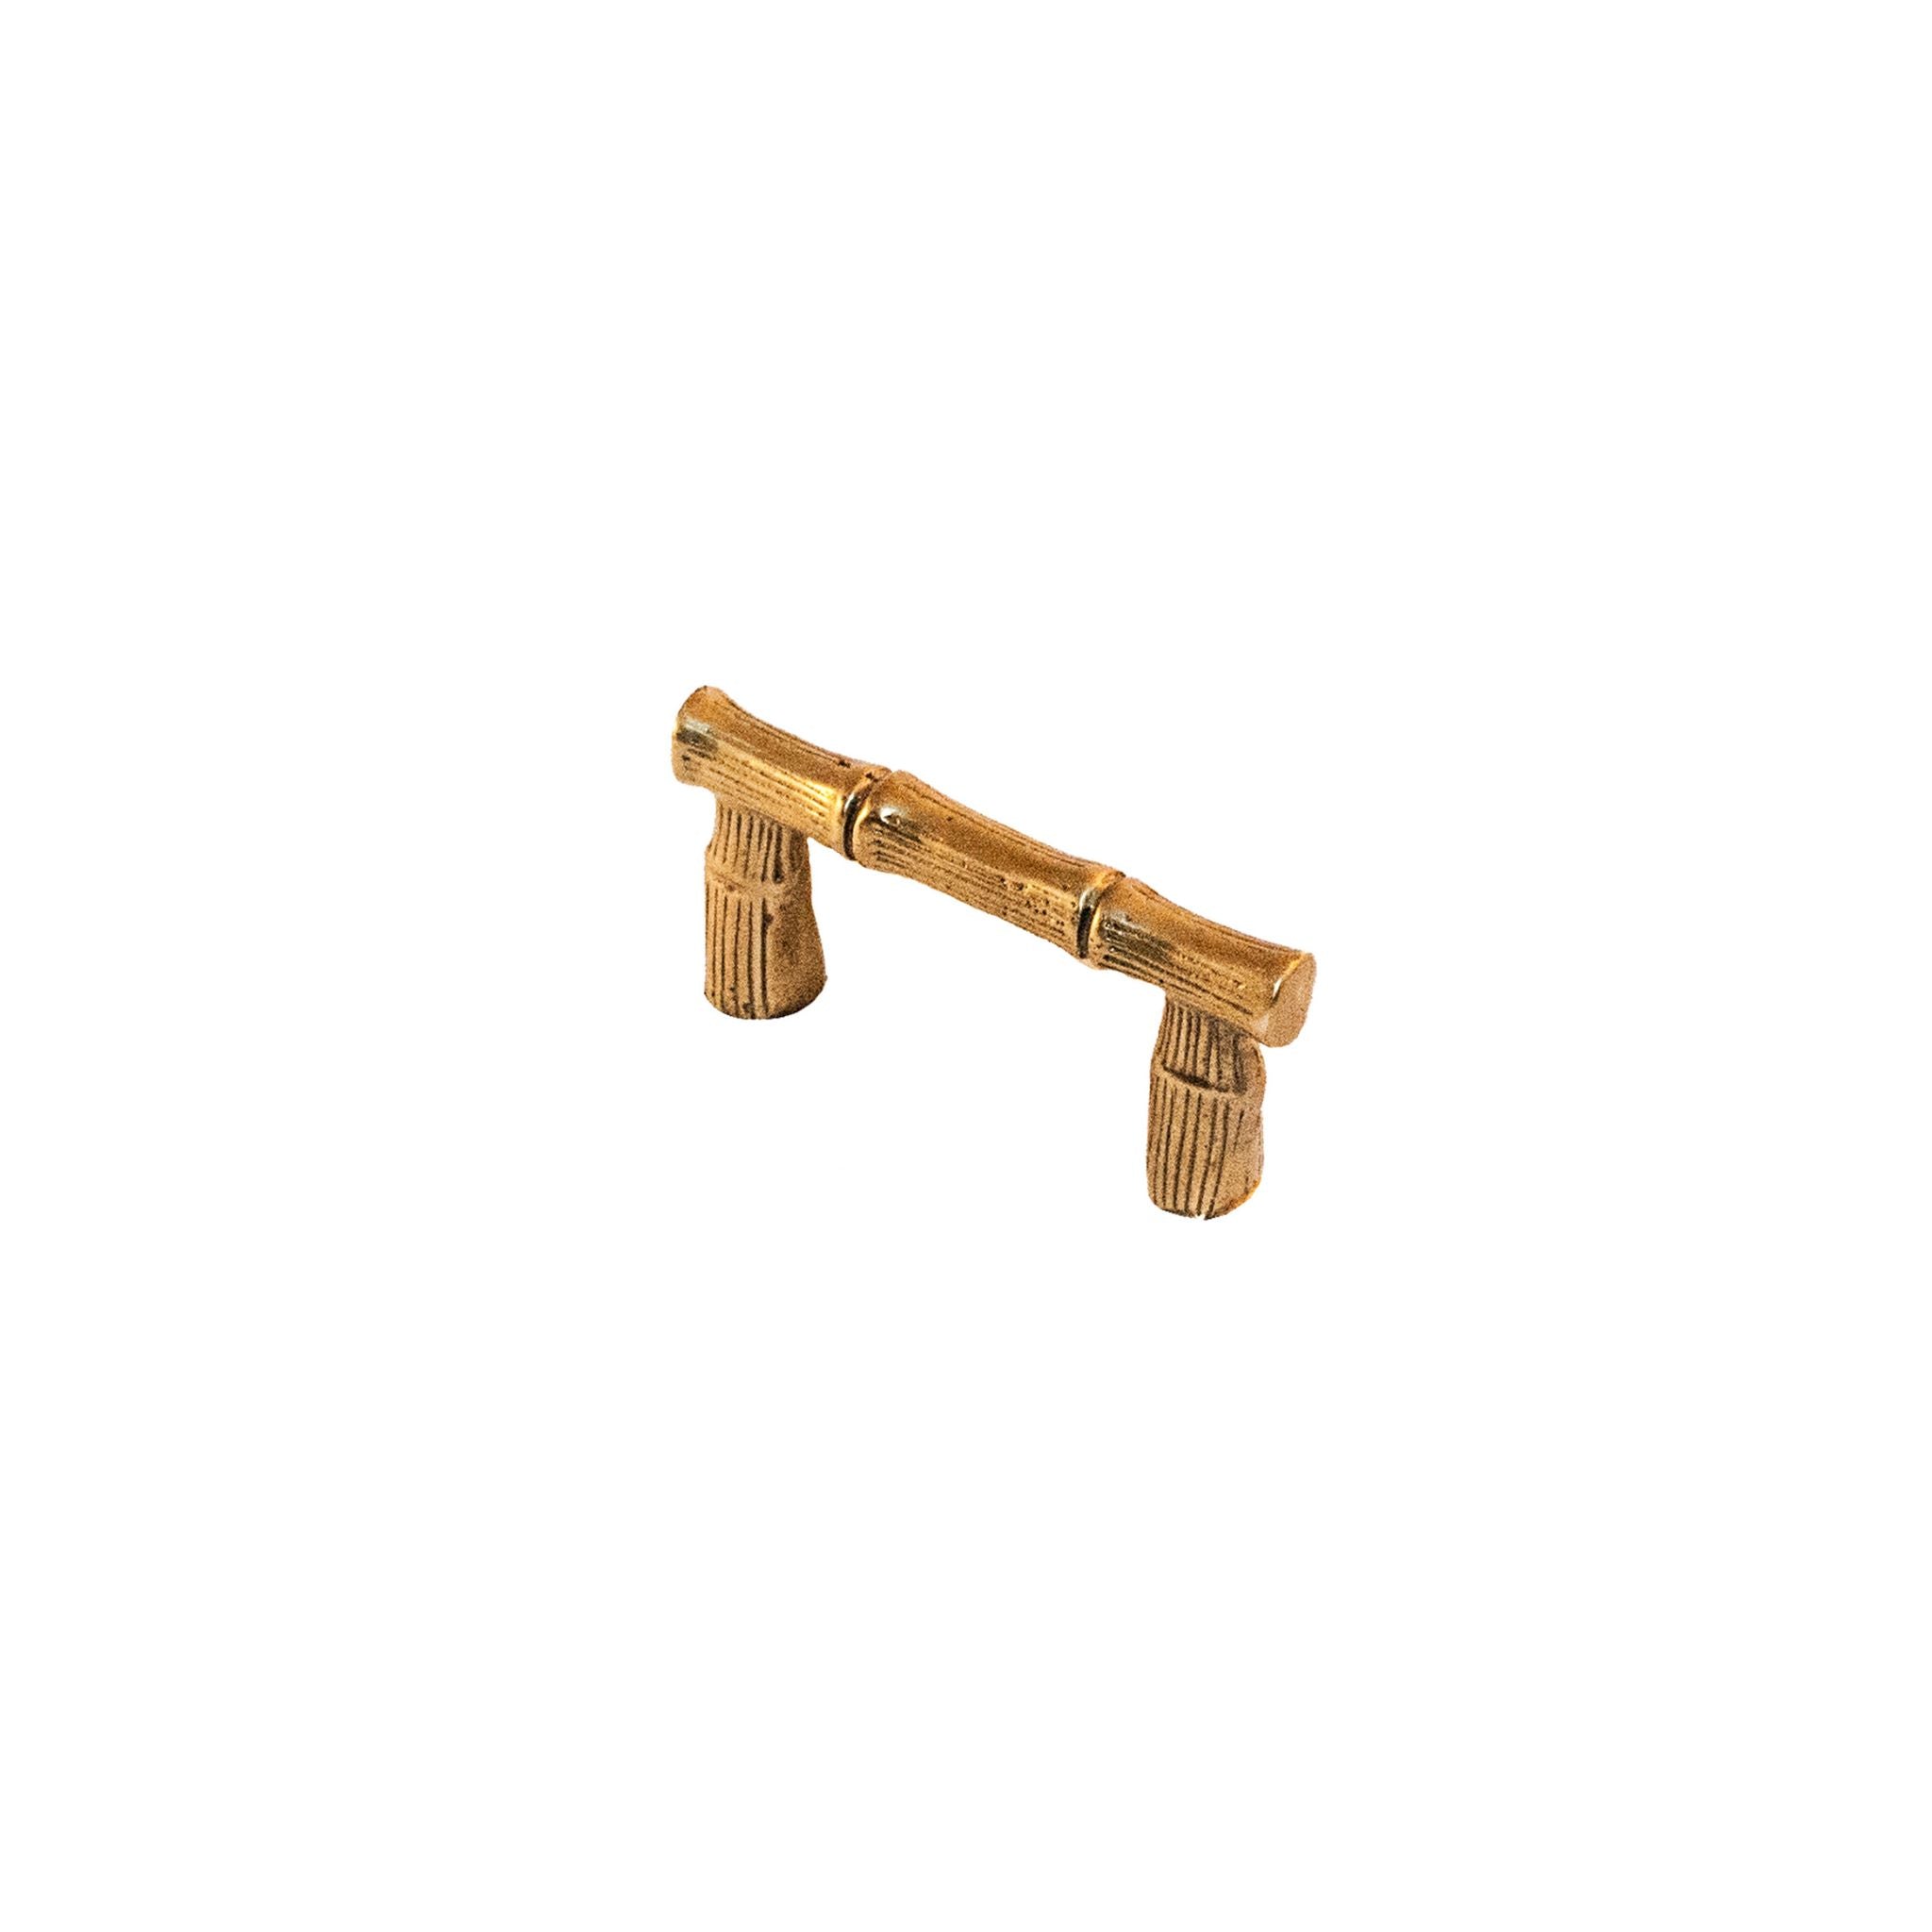 Bamboo brass knots small knob - ilbronzetto